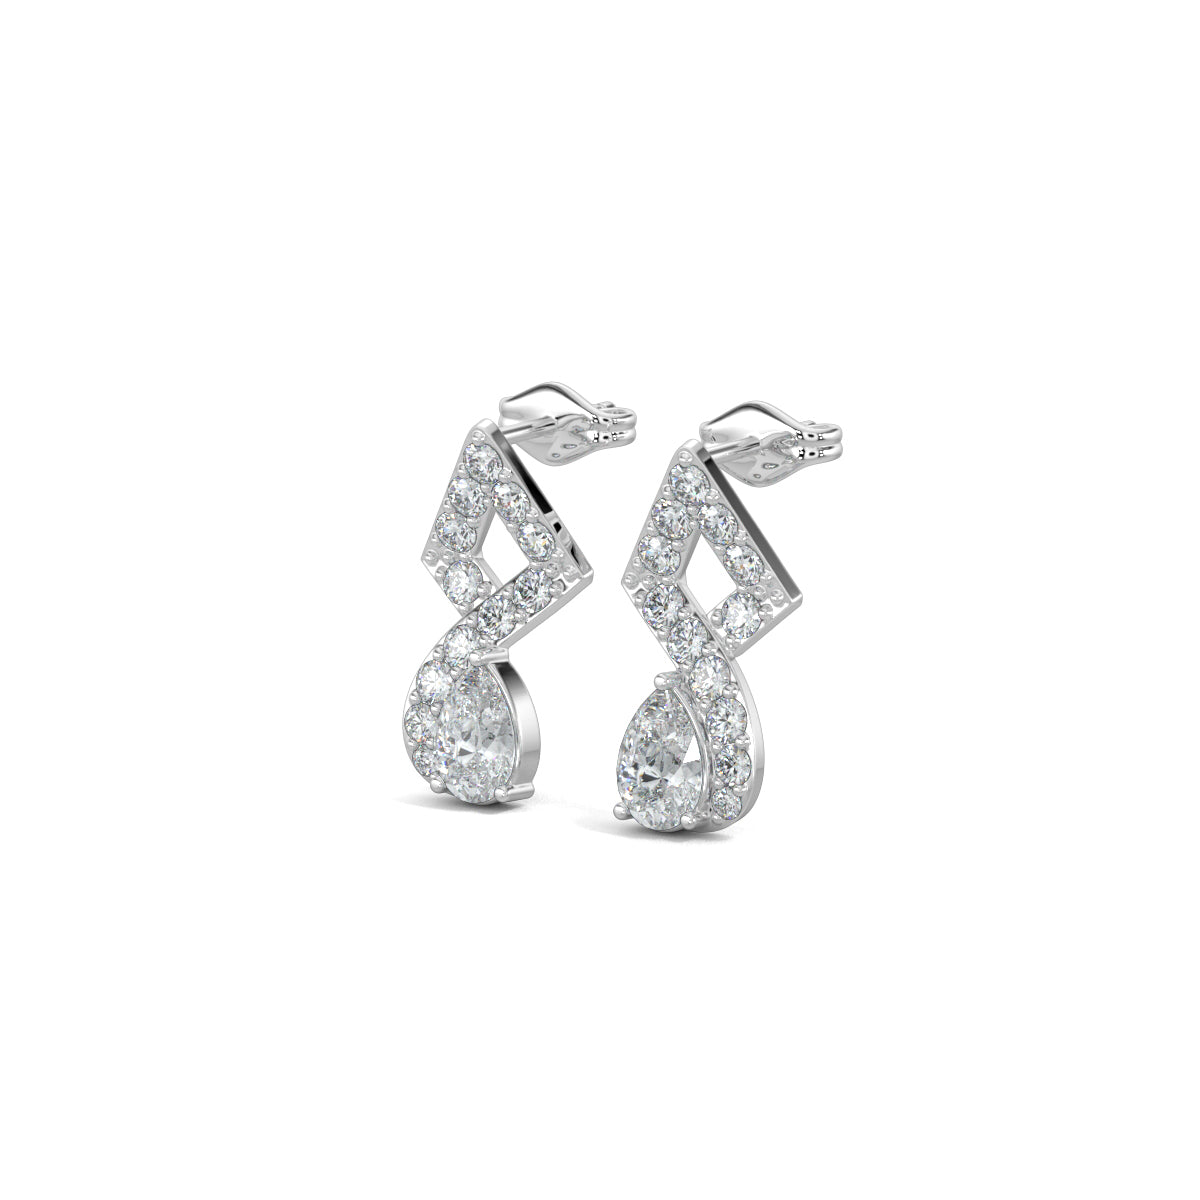 White Gold, Diamond Earrings, Twisted Elegance earrings, diamond earrings, natural diamonds, lab-grown diamonds, pear-cut diamonds, pave setting, mid-length earrings, traditional design, contemporary elegance